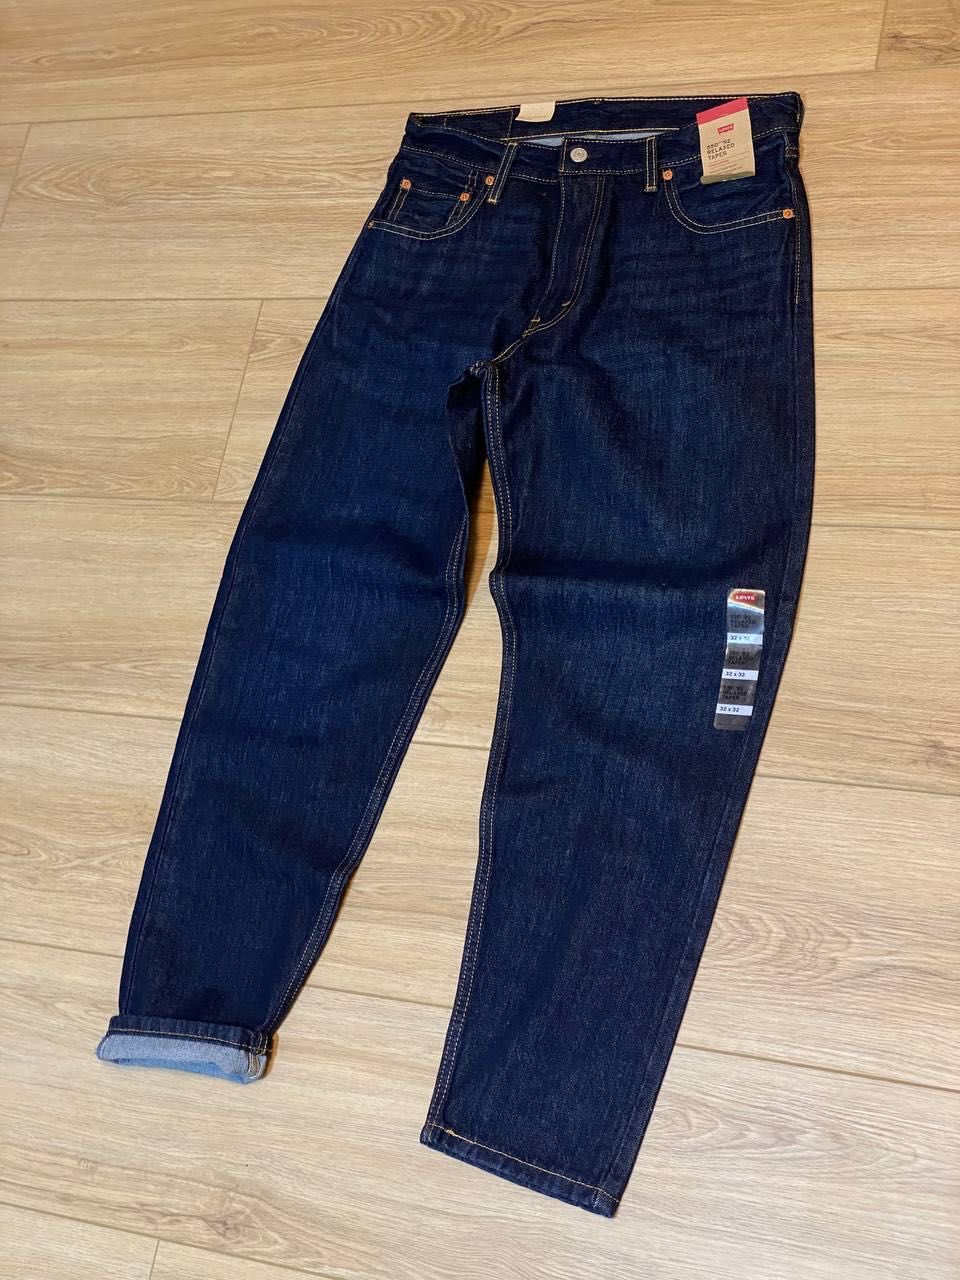 Original Levi's Jeans 550